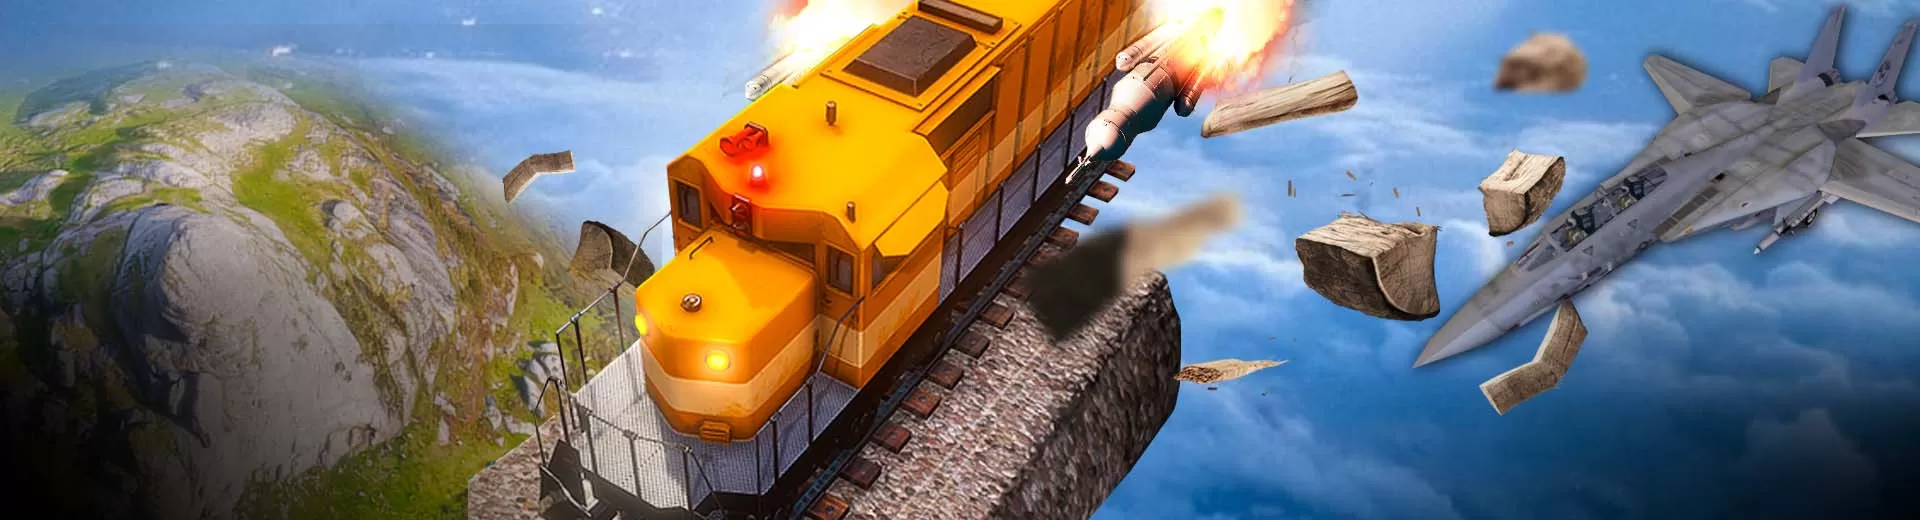 Train Ramp Jumping Emulator Pc